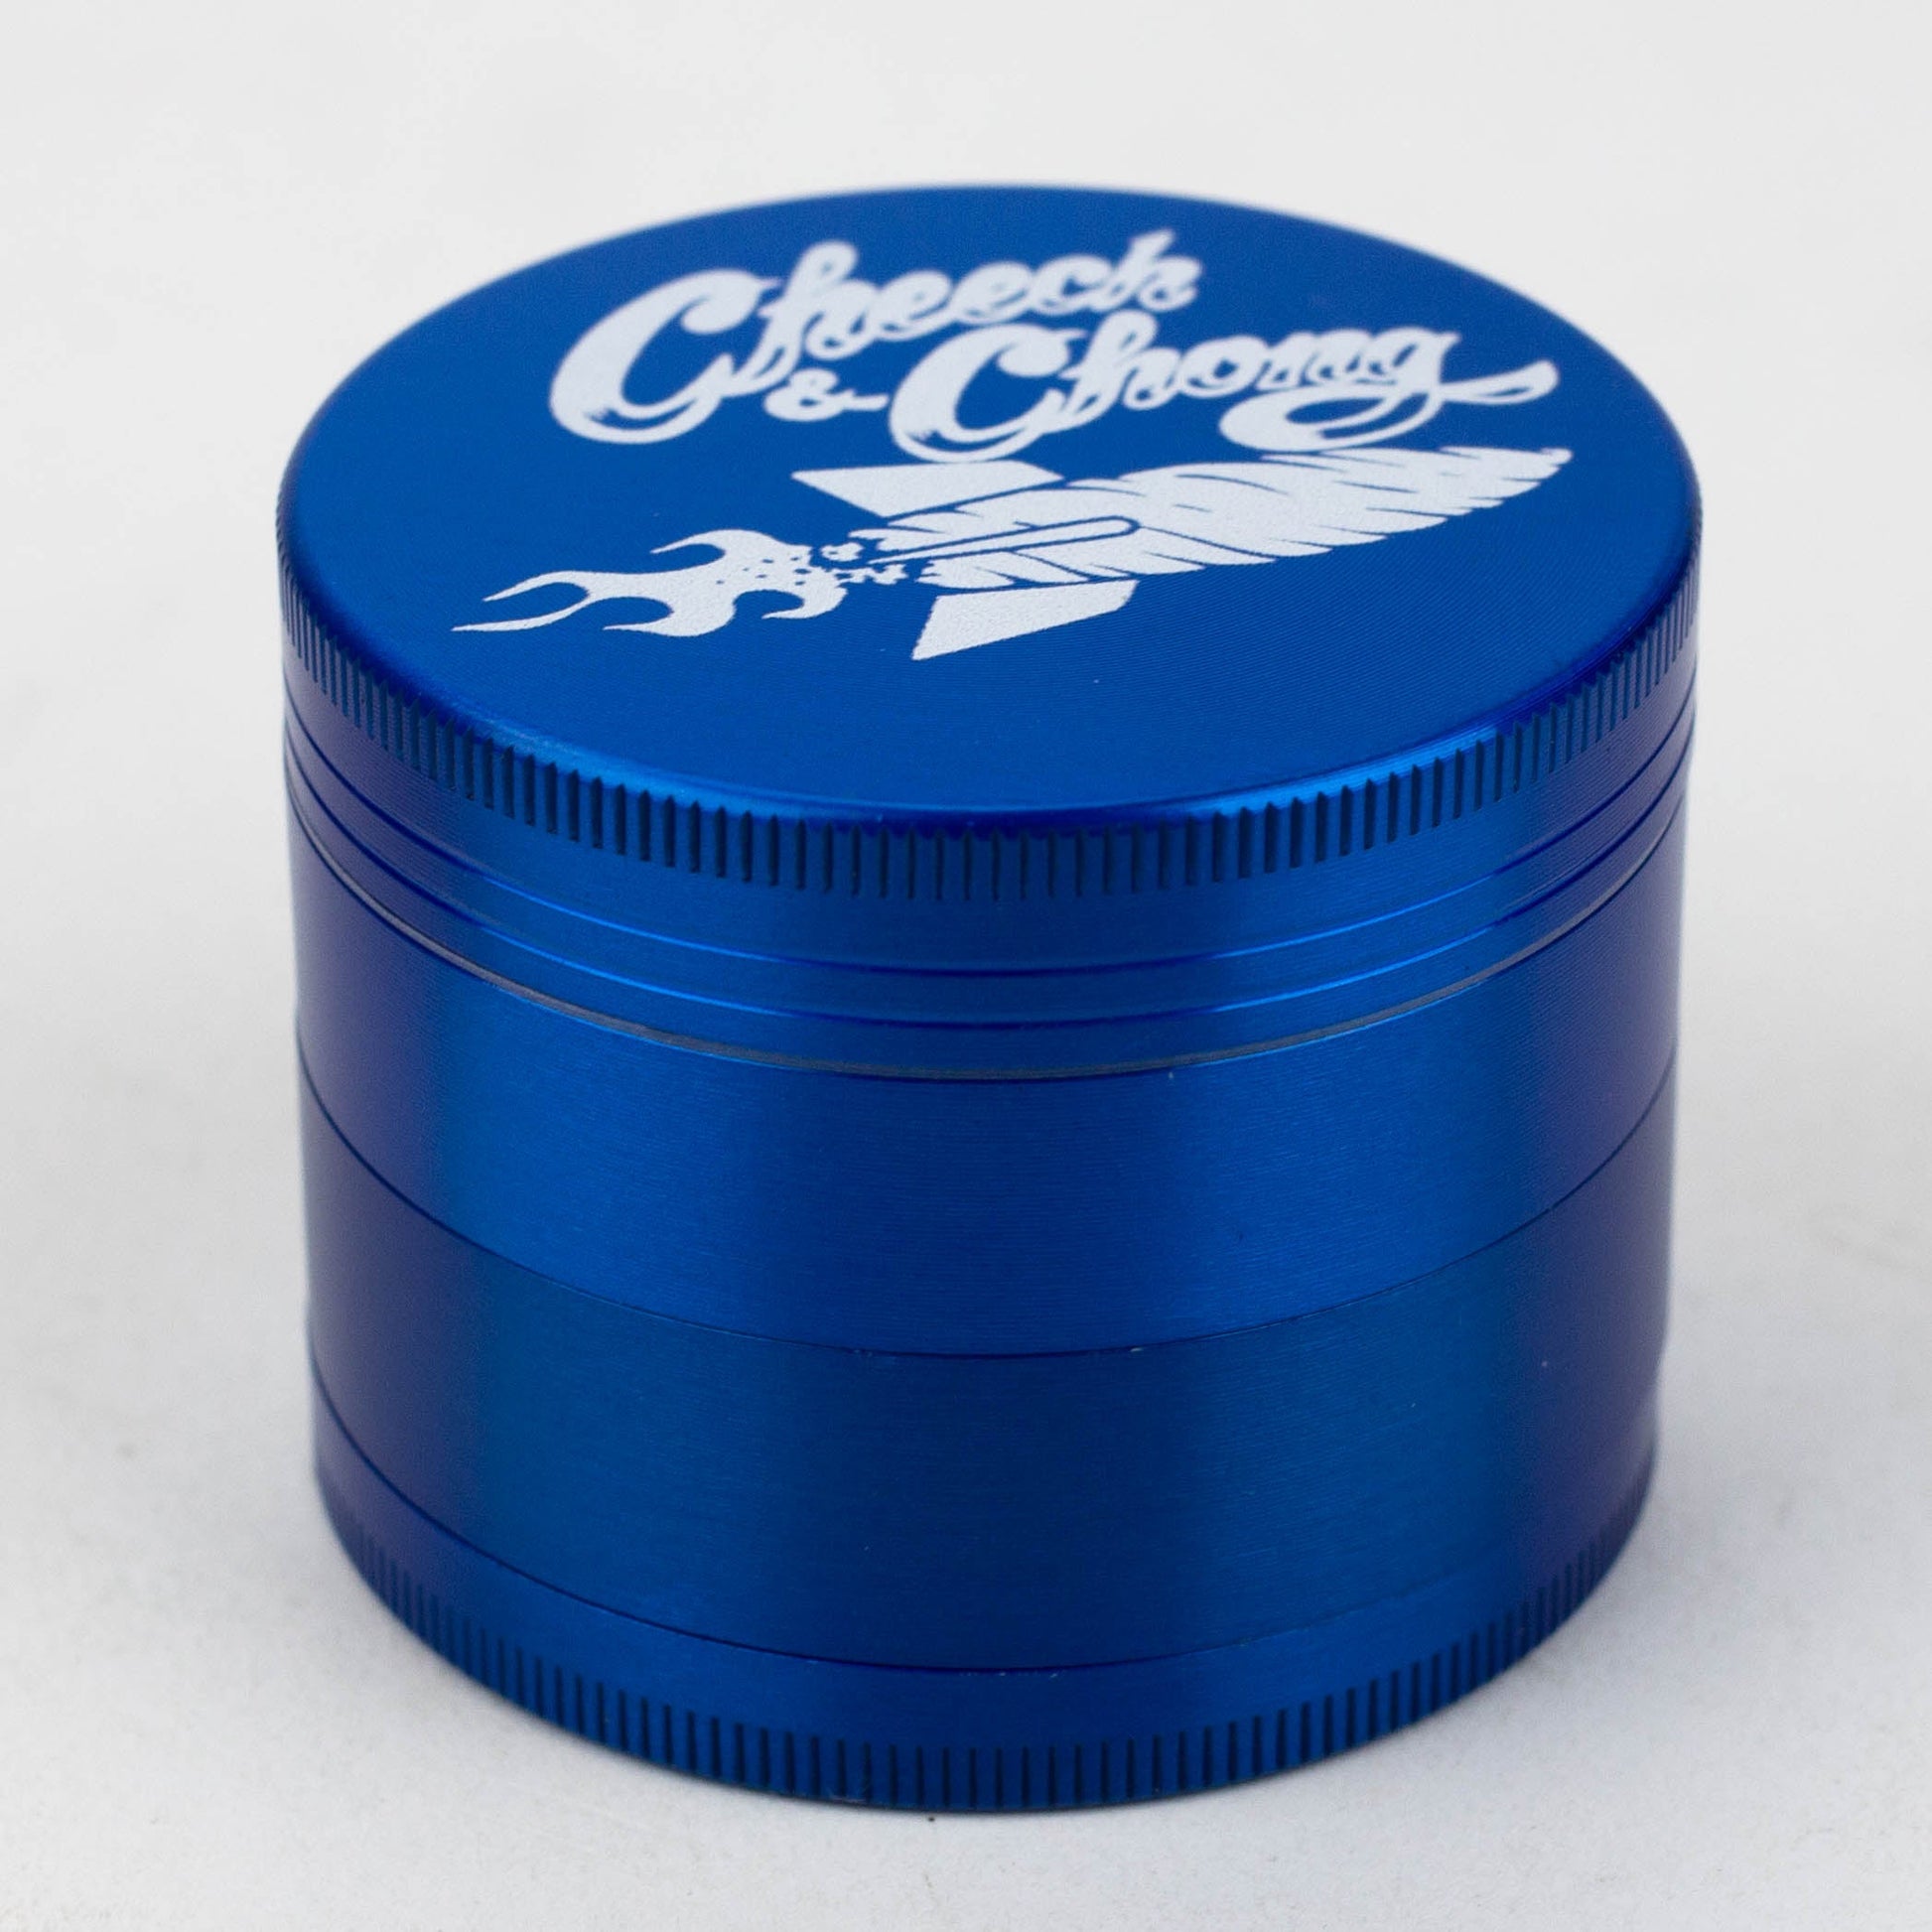 Cheeck & Chong - 4 parts metal grinder by Infyniti_3